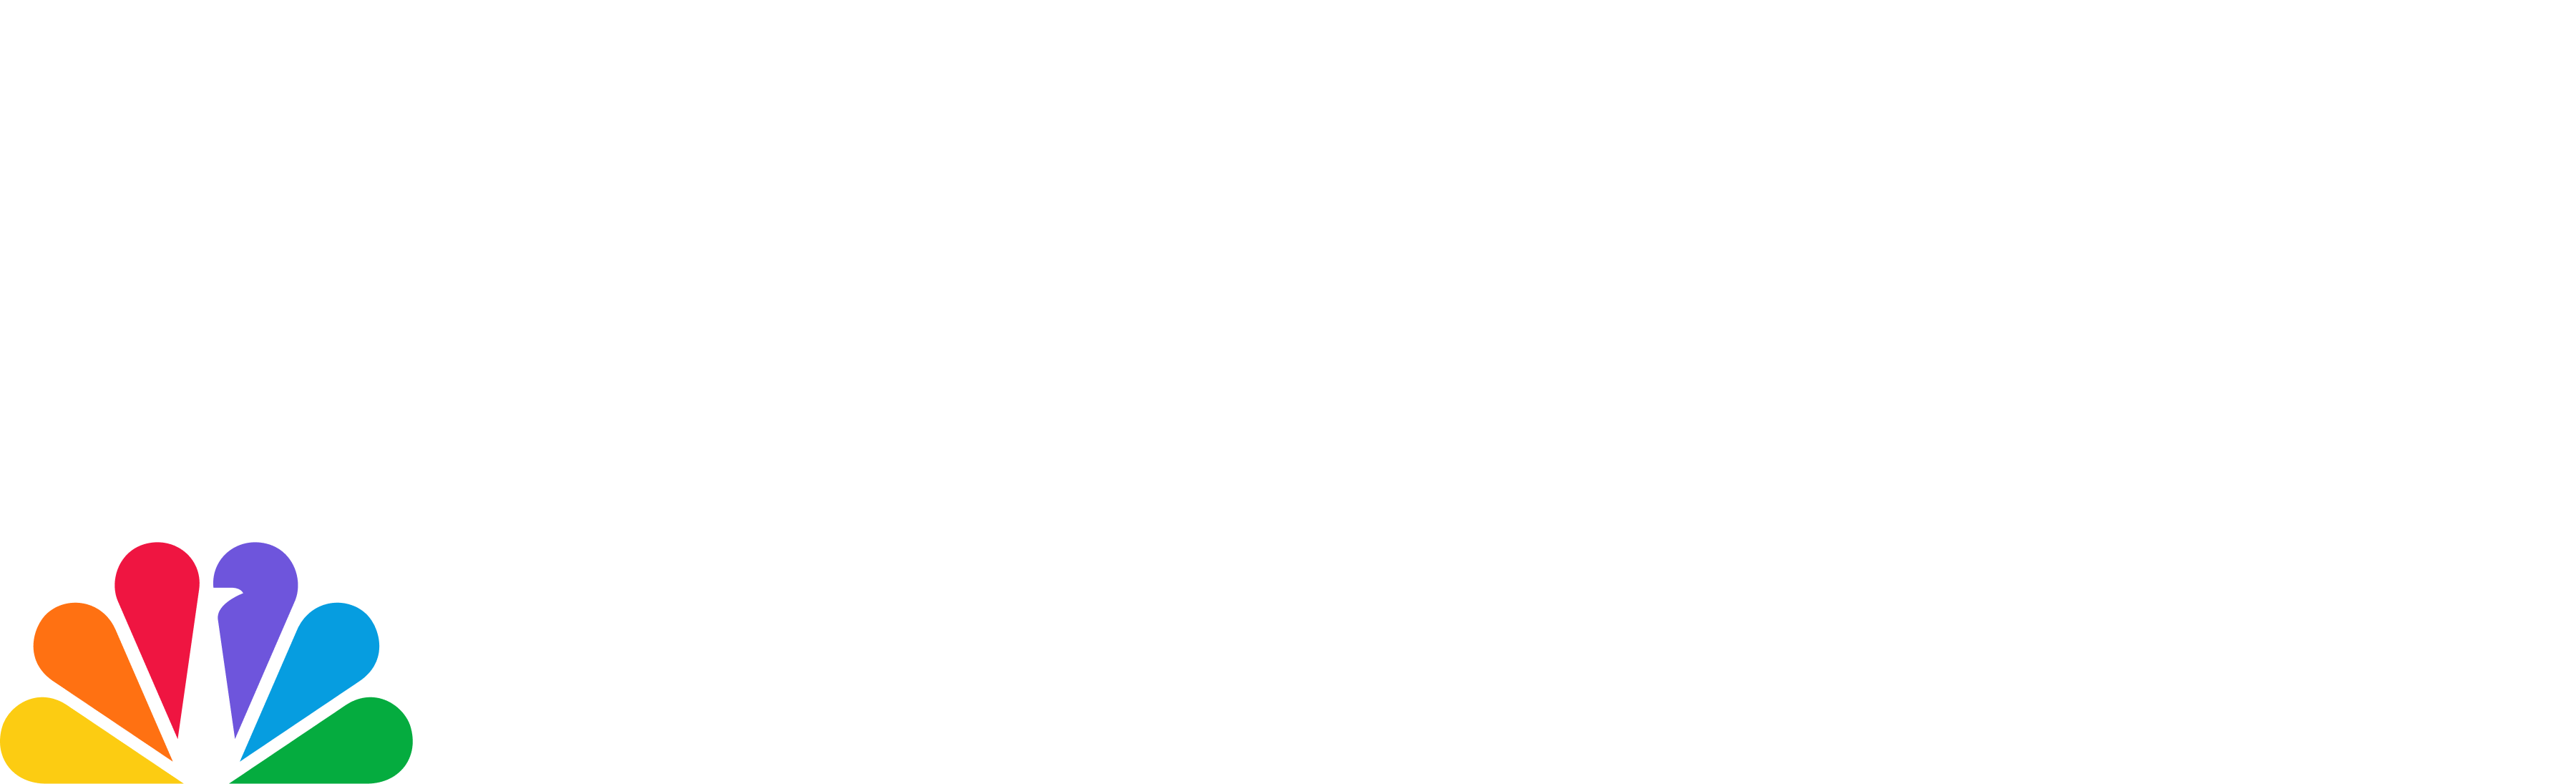 Morning News Live Logo